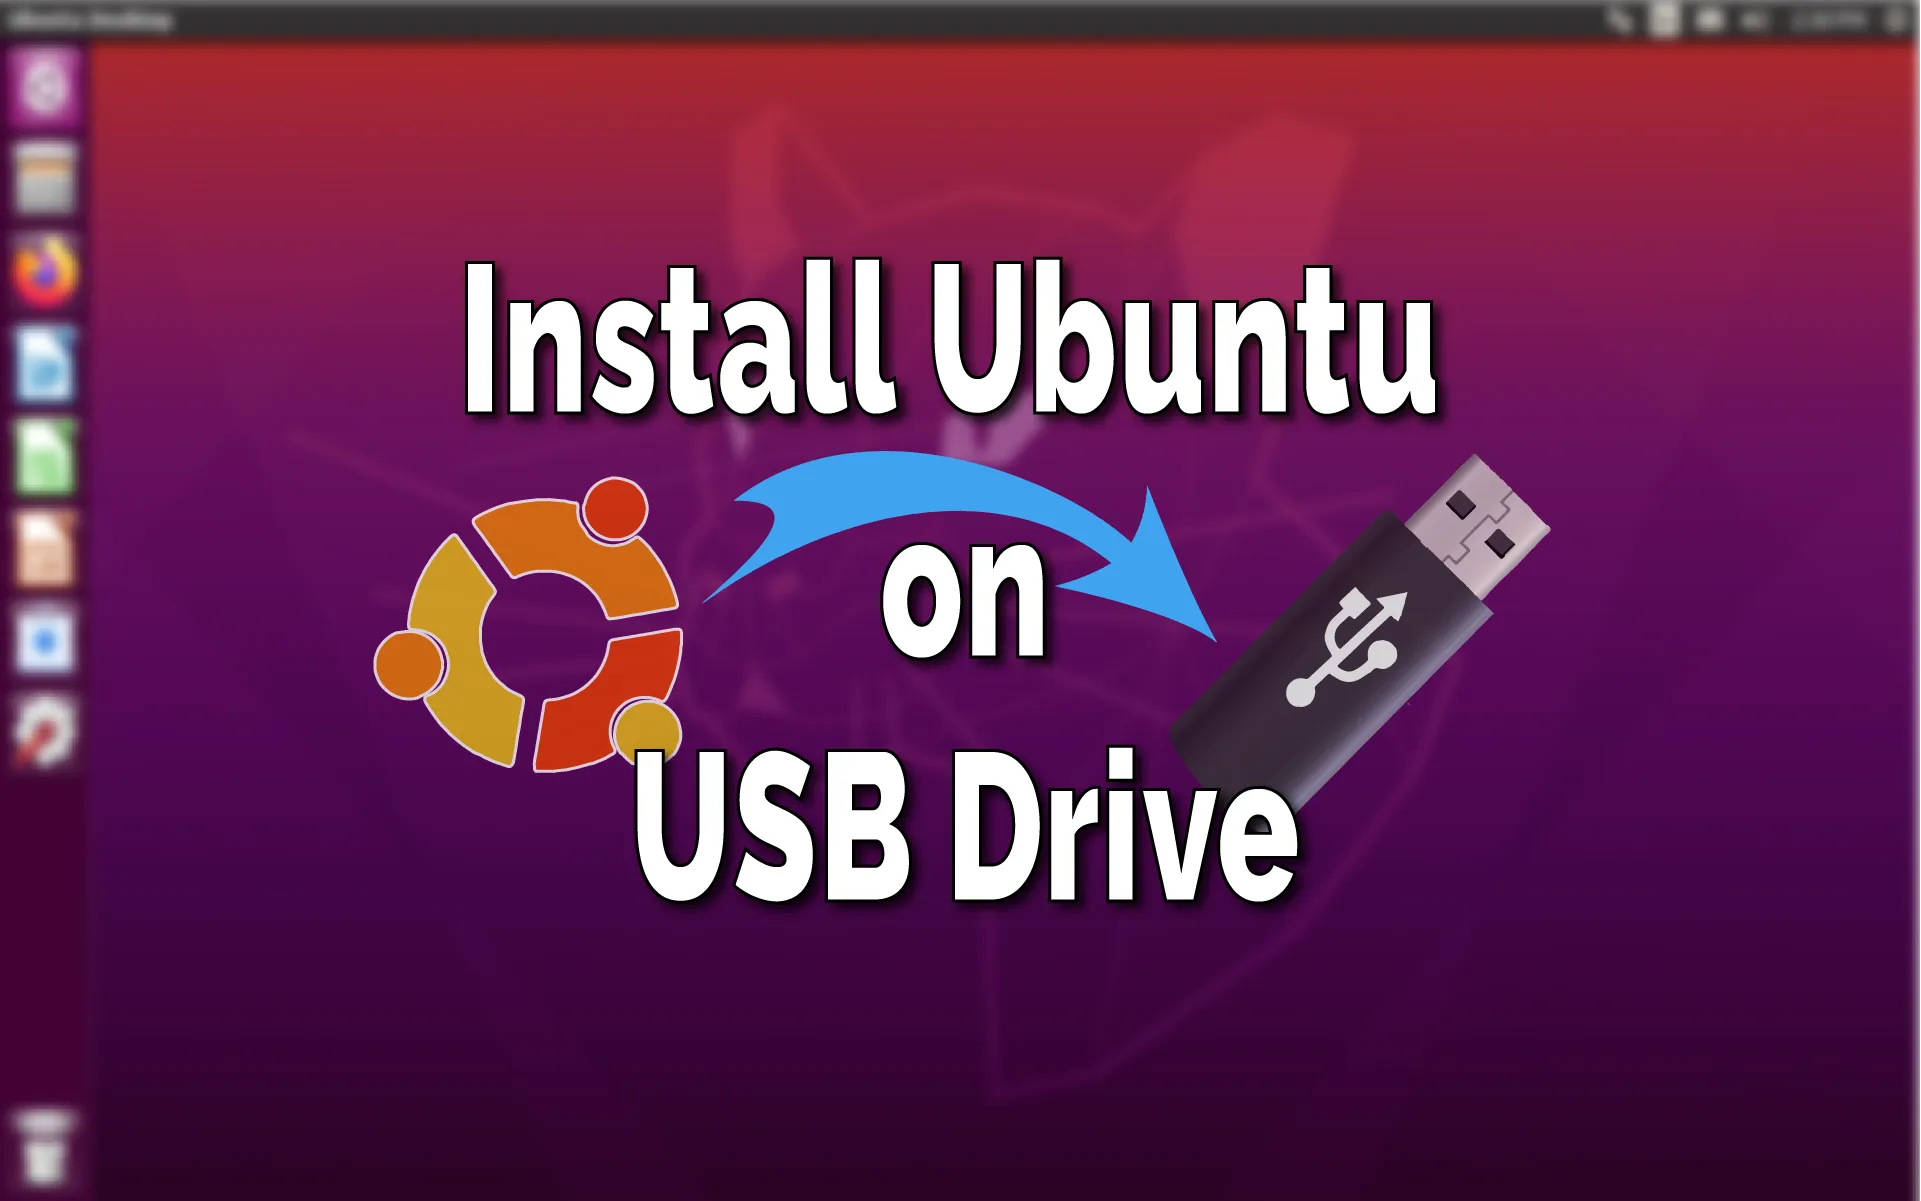 Ugyldigt følelsesmæssig enestående How to Install Ubuntu on USB Drive? - TechSphinx